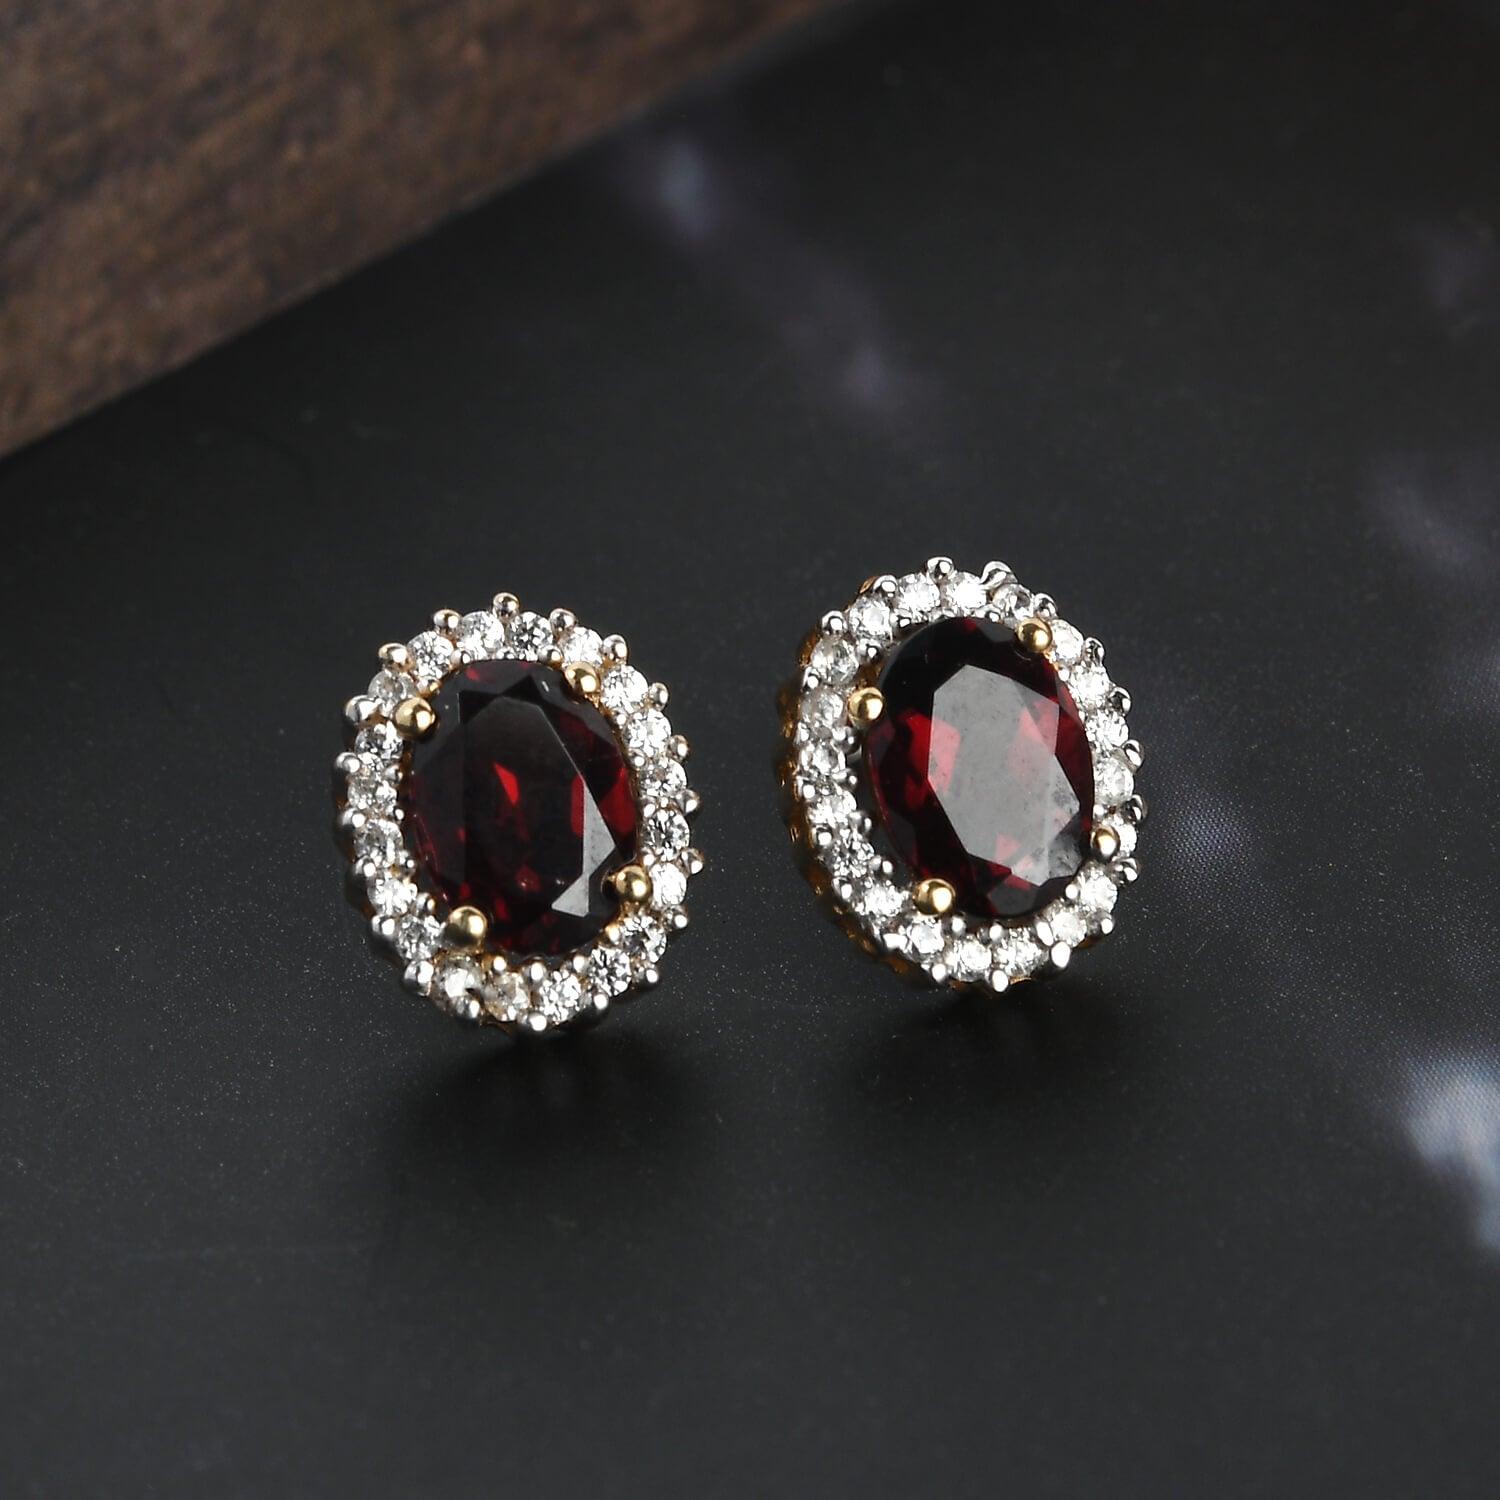 Red Garnet Jewelry - The January Birthstone - Inspiring Jewellery